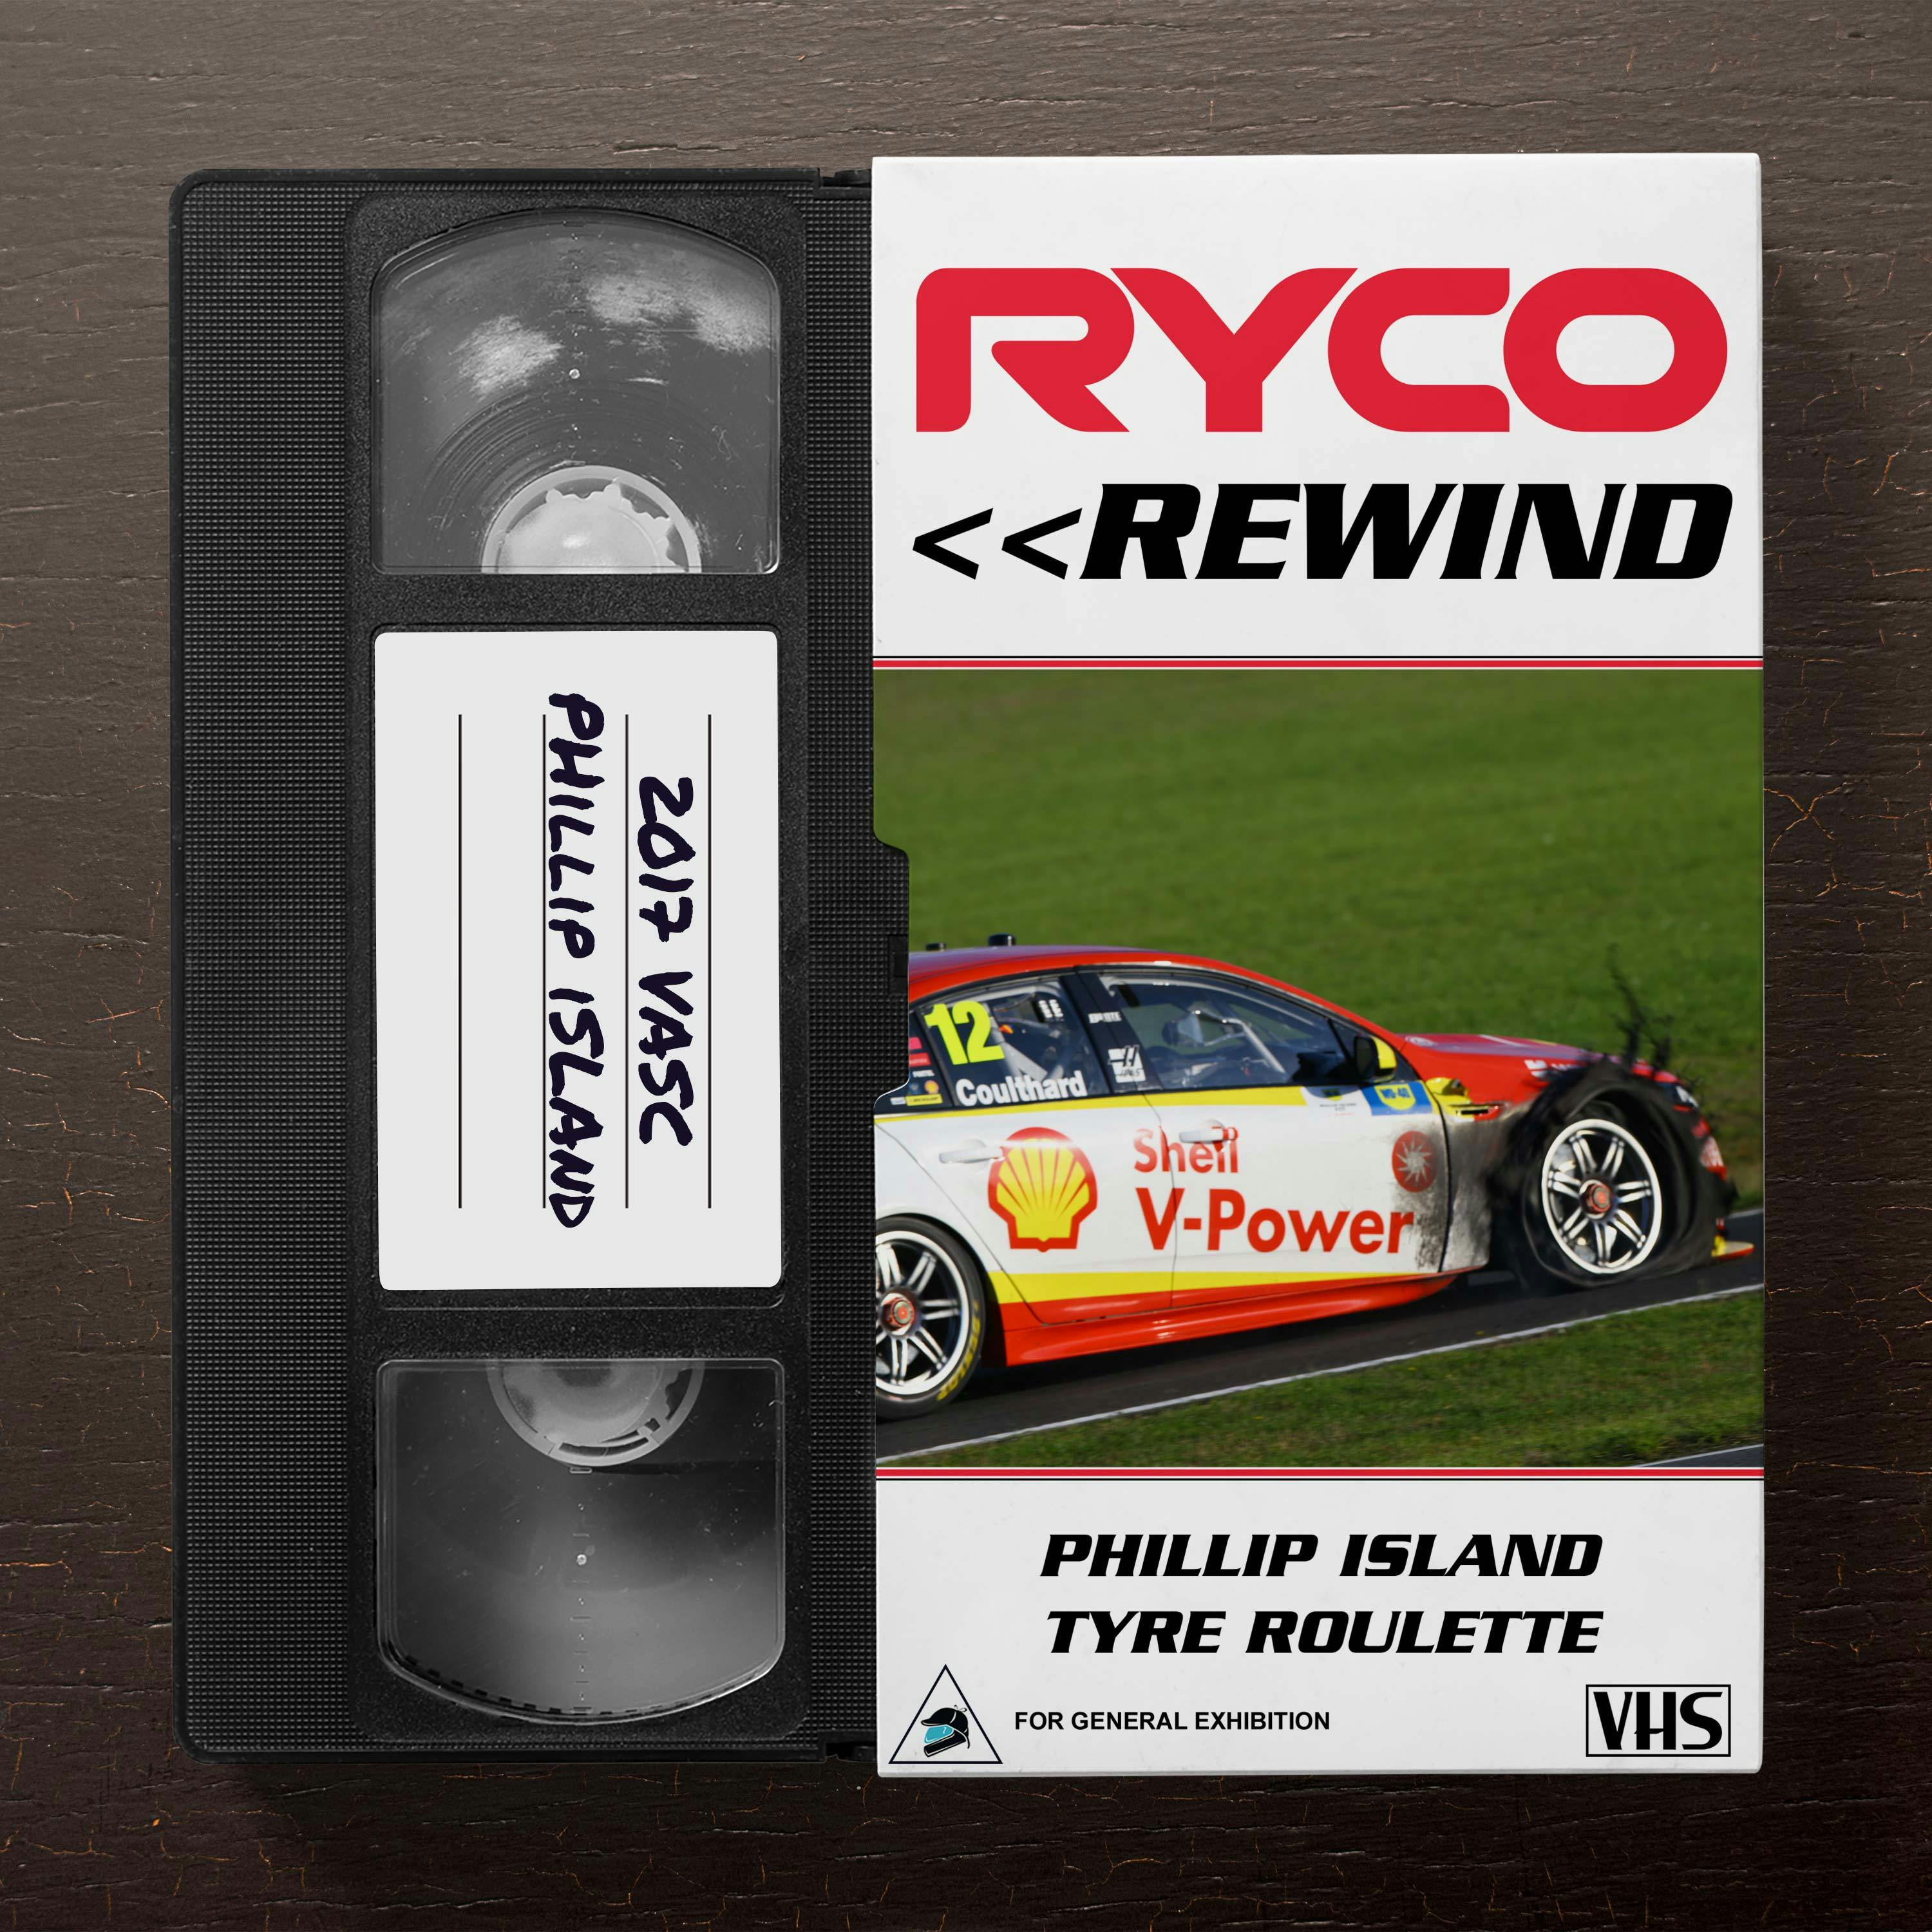 Ryco Rewind: Phillip Island tyre roulette